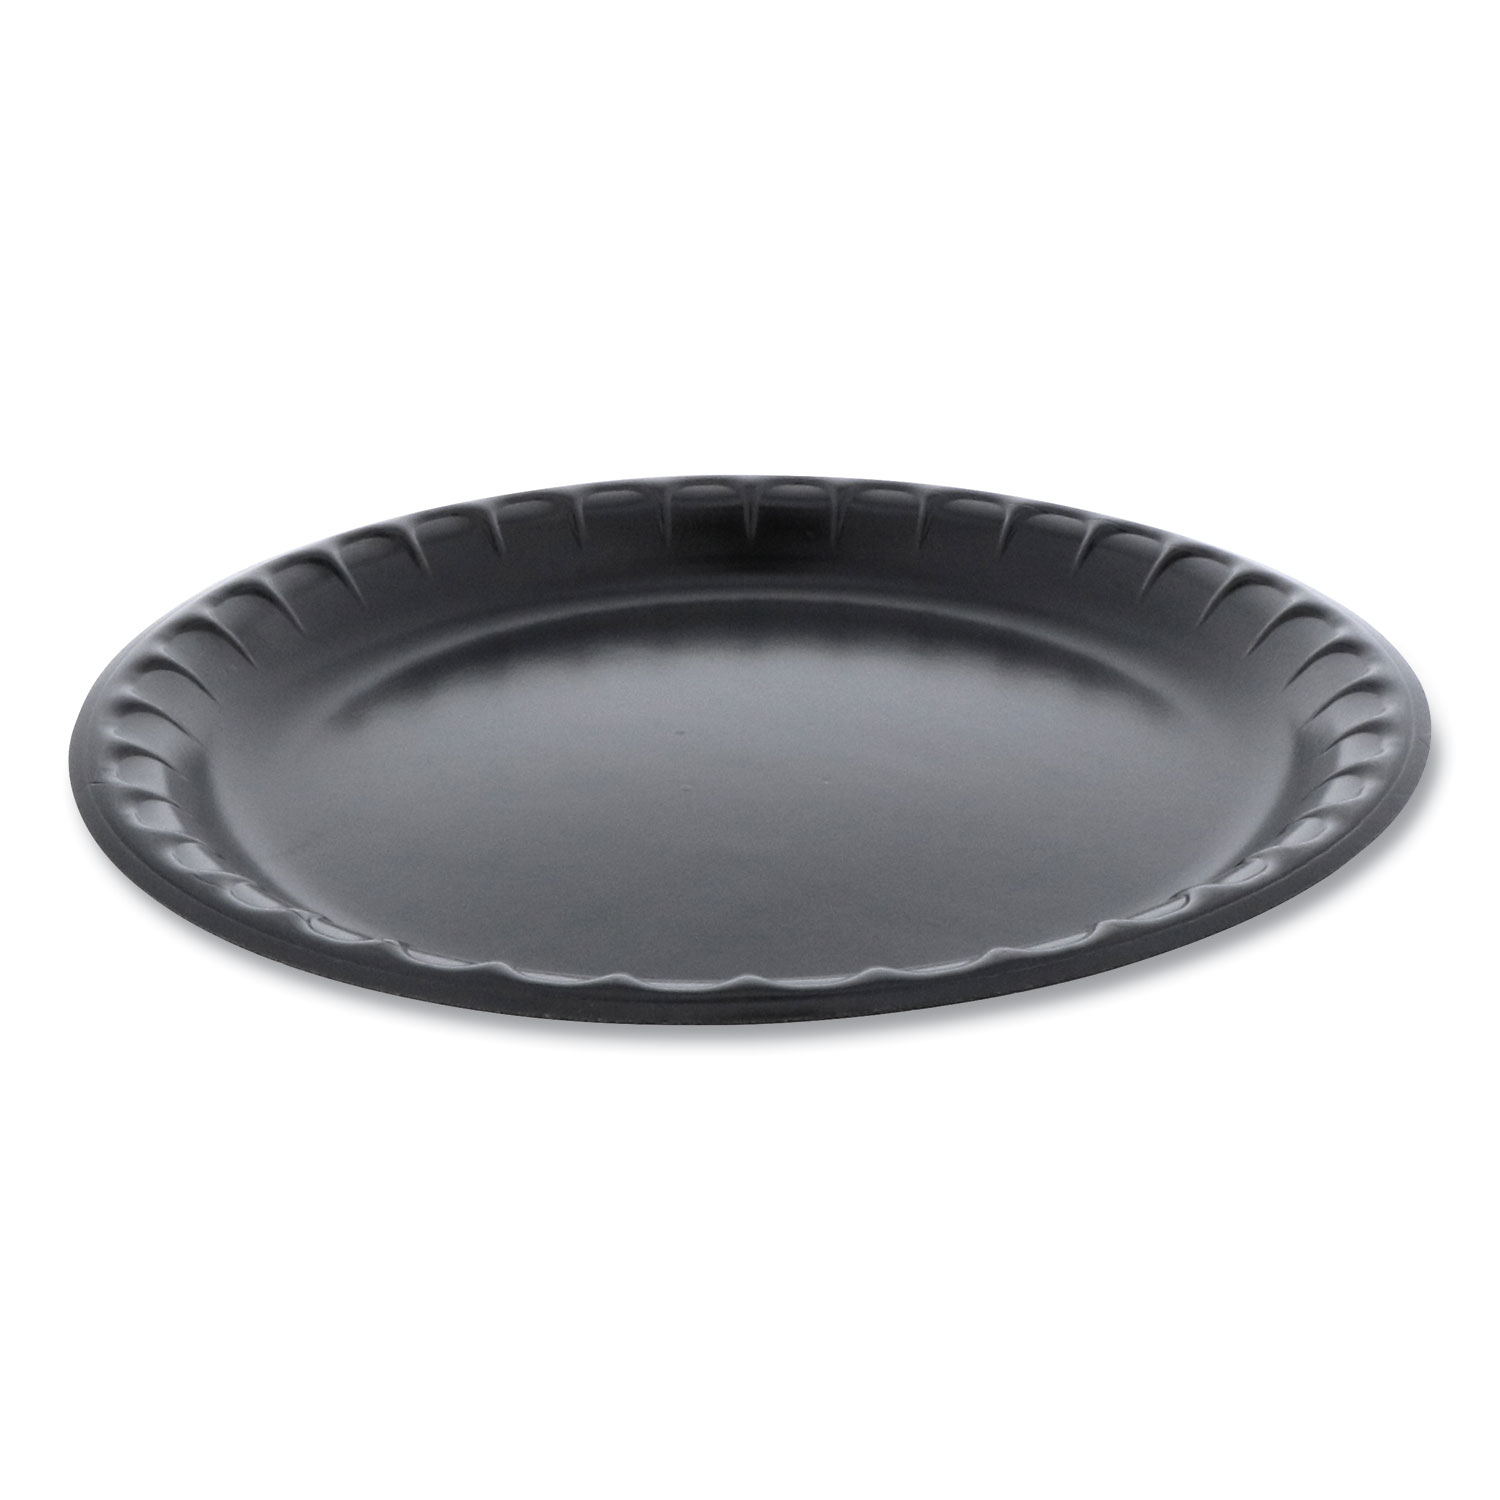  Pactiv 0TKB0010000Y Laminated Foam Dinnerware, Plate, 10.25 Diameter, Black, 540/Carton (PCT0TKB0010000Y) 